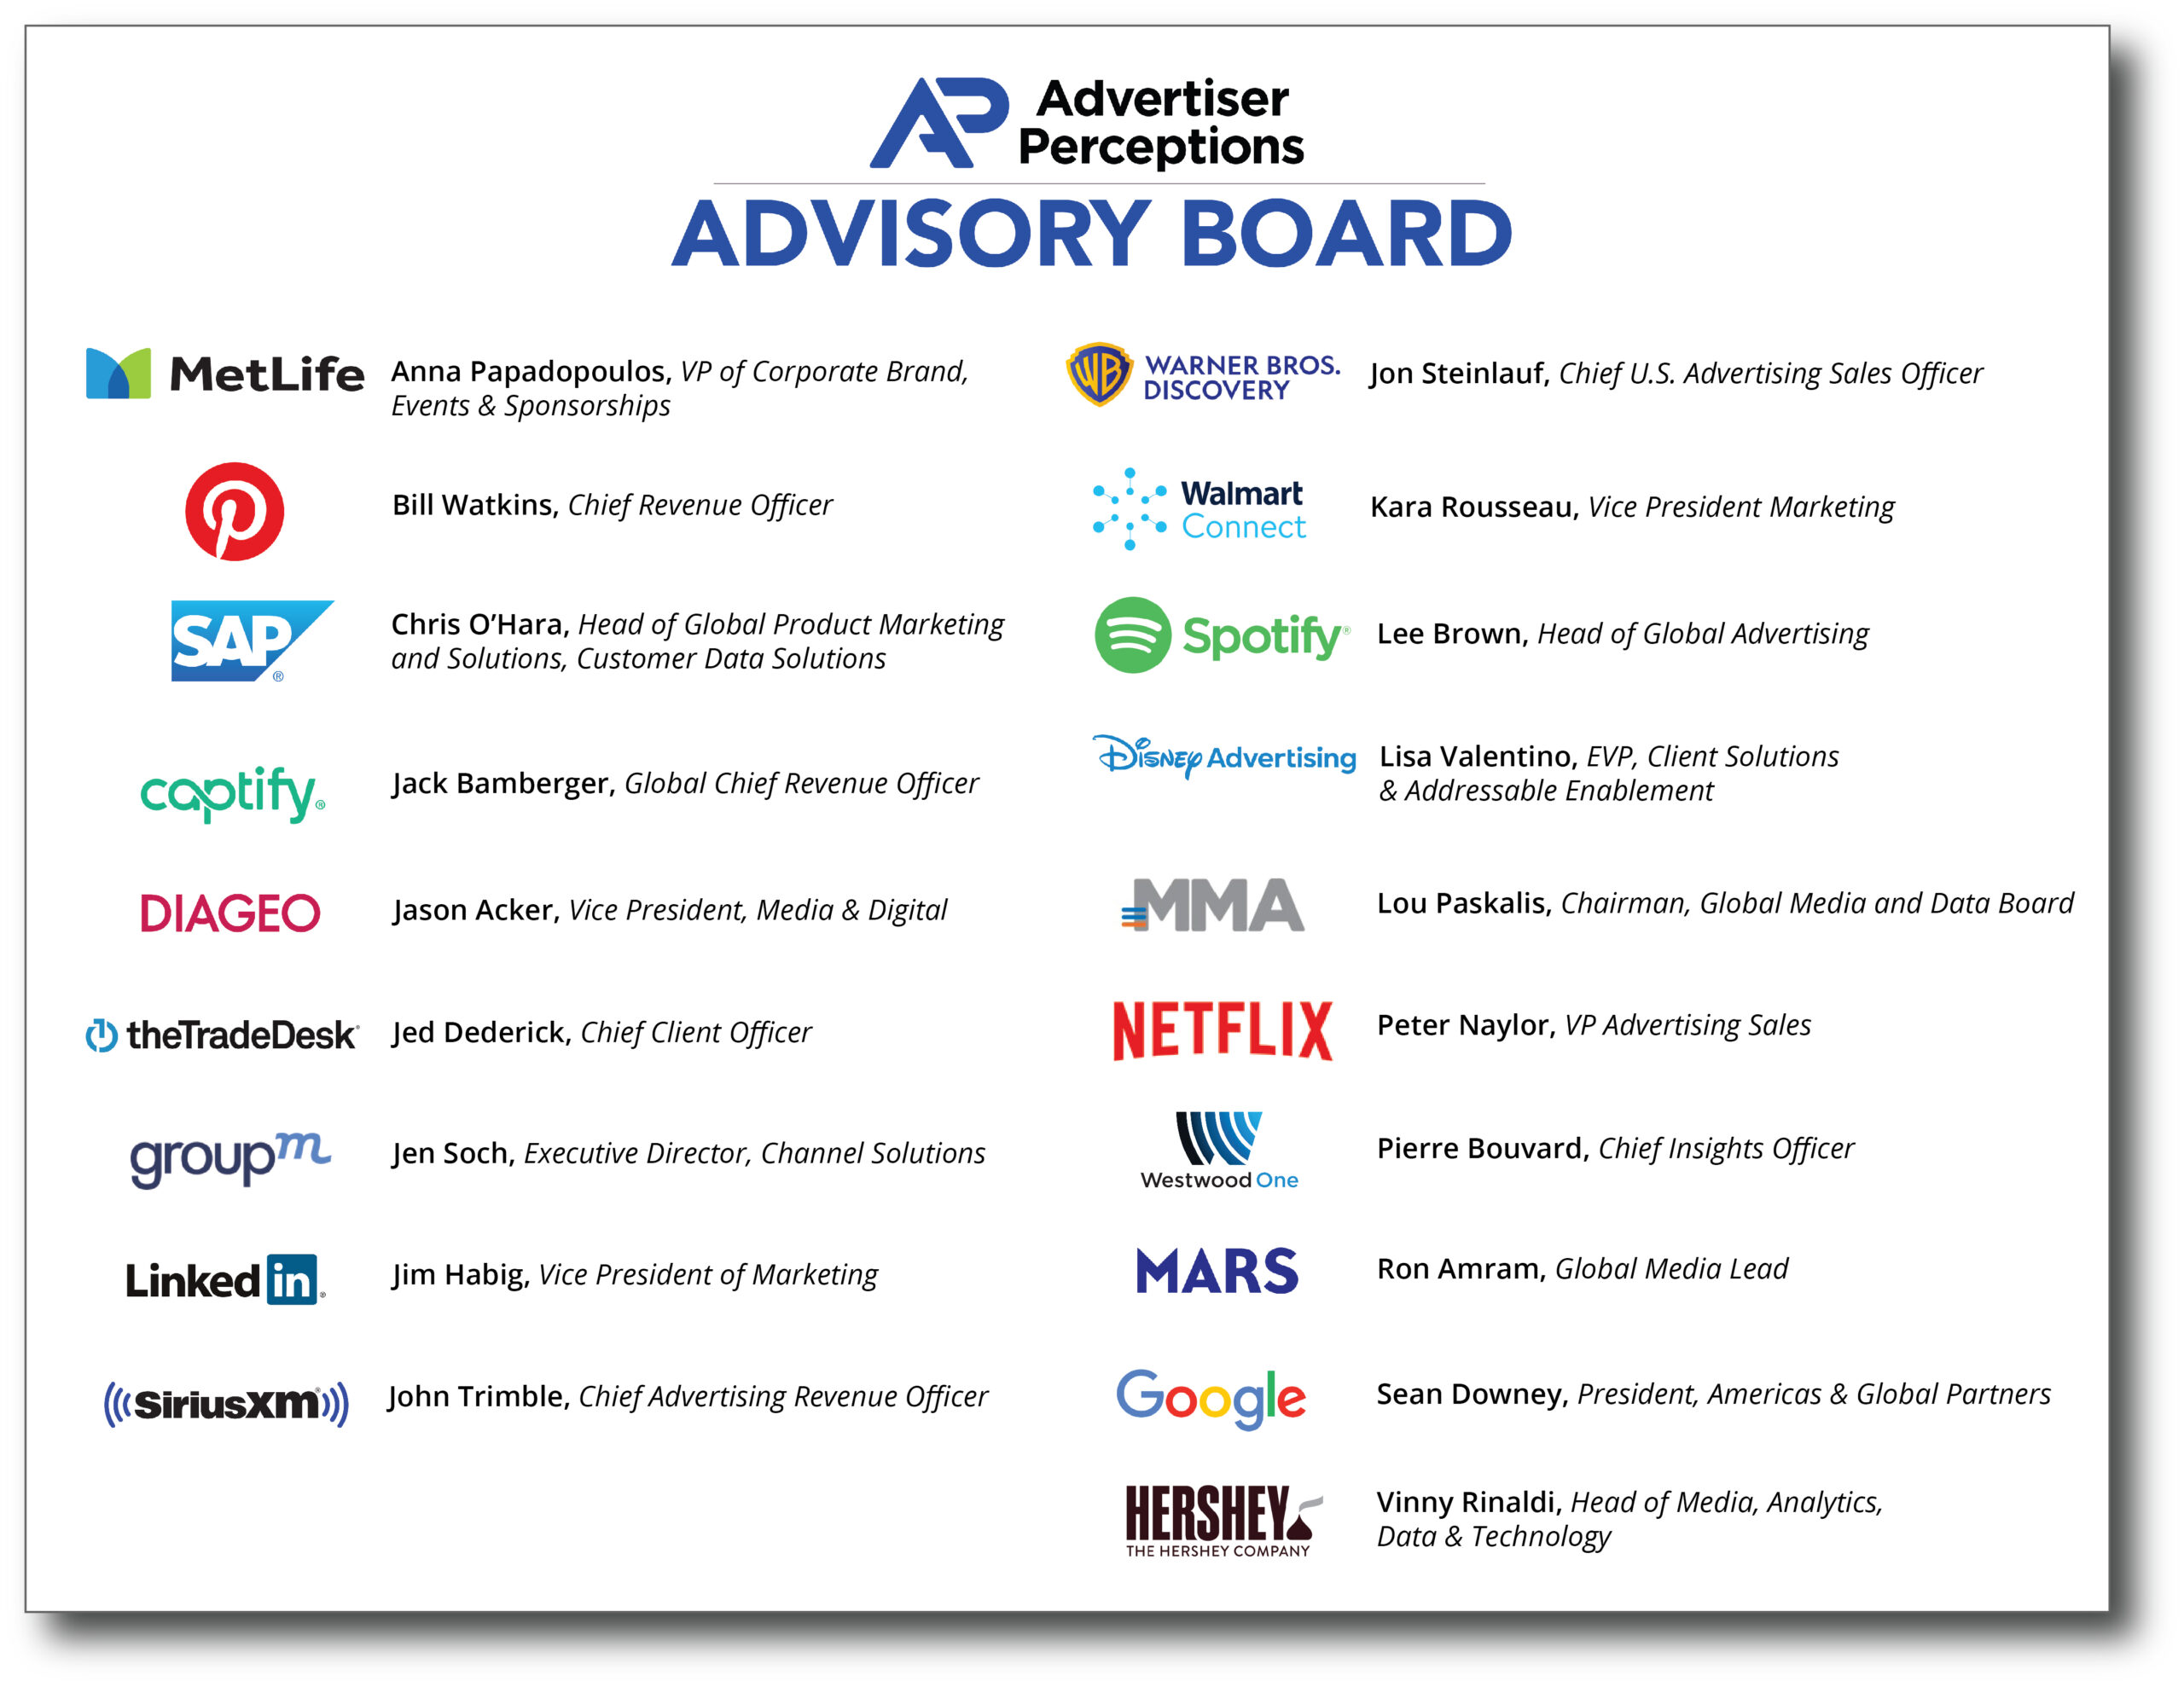 Advertiser Perceptions Advisory Board